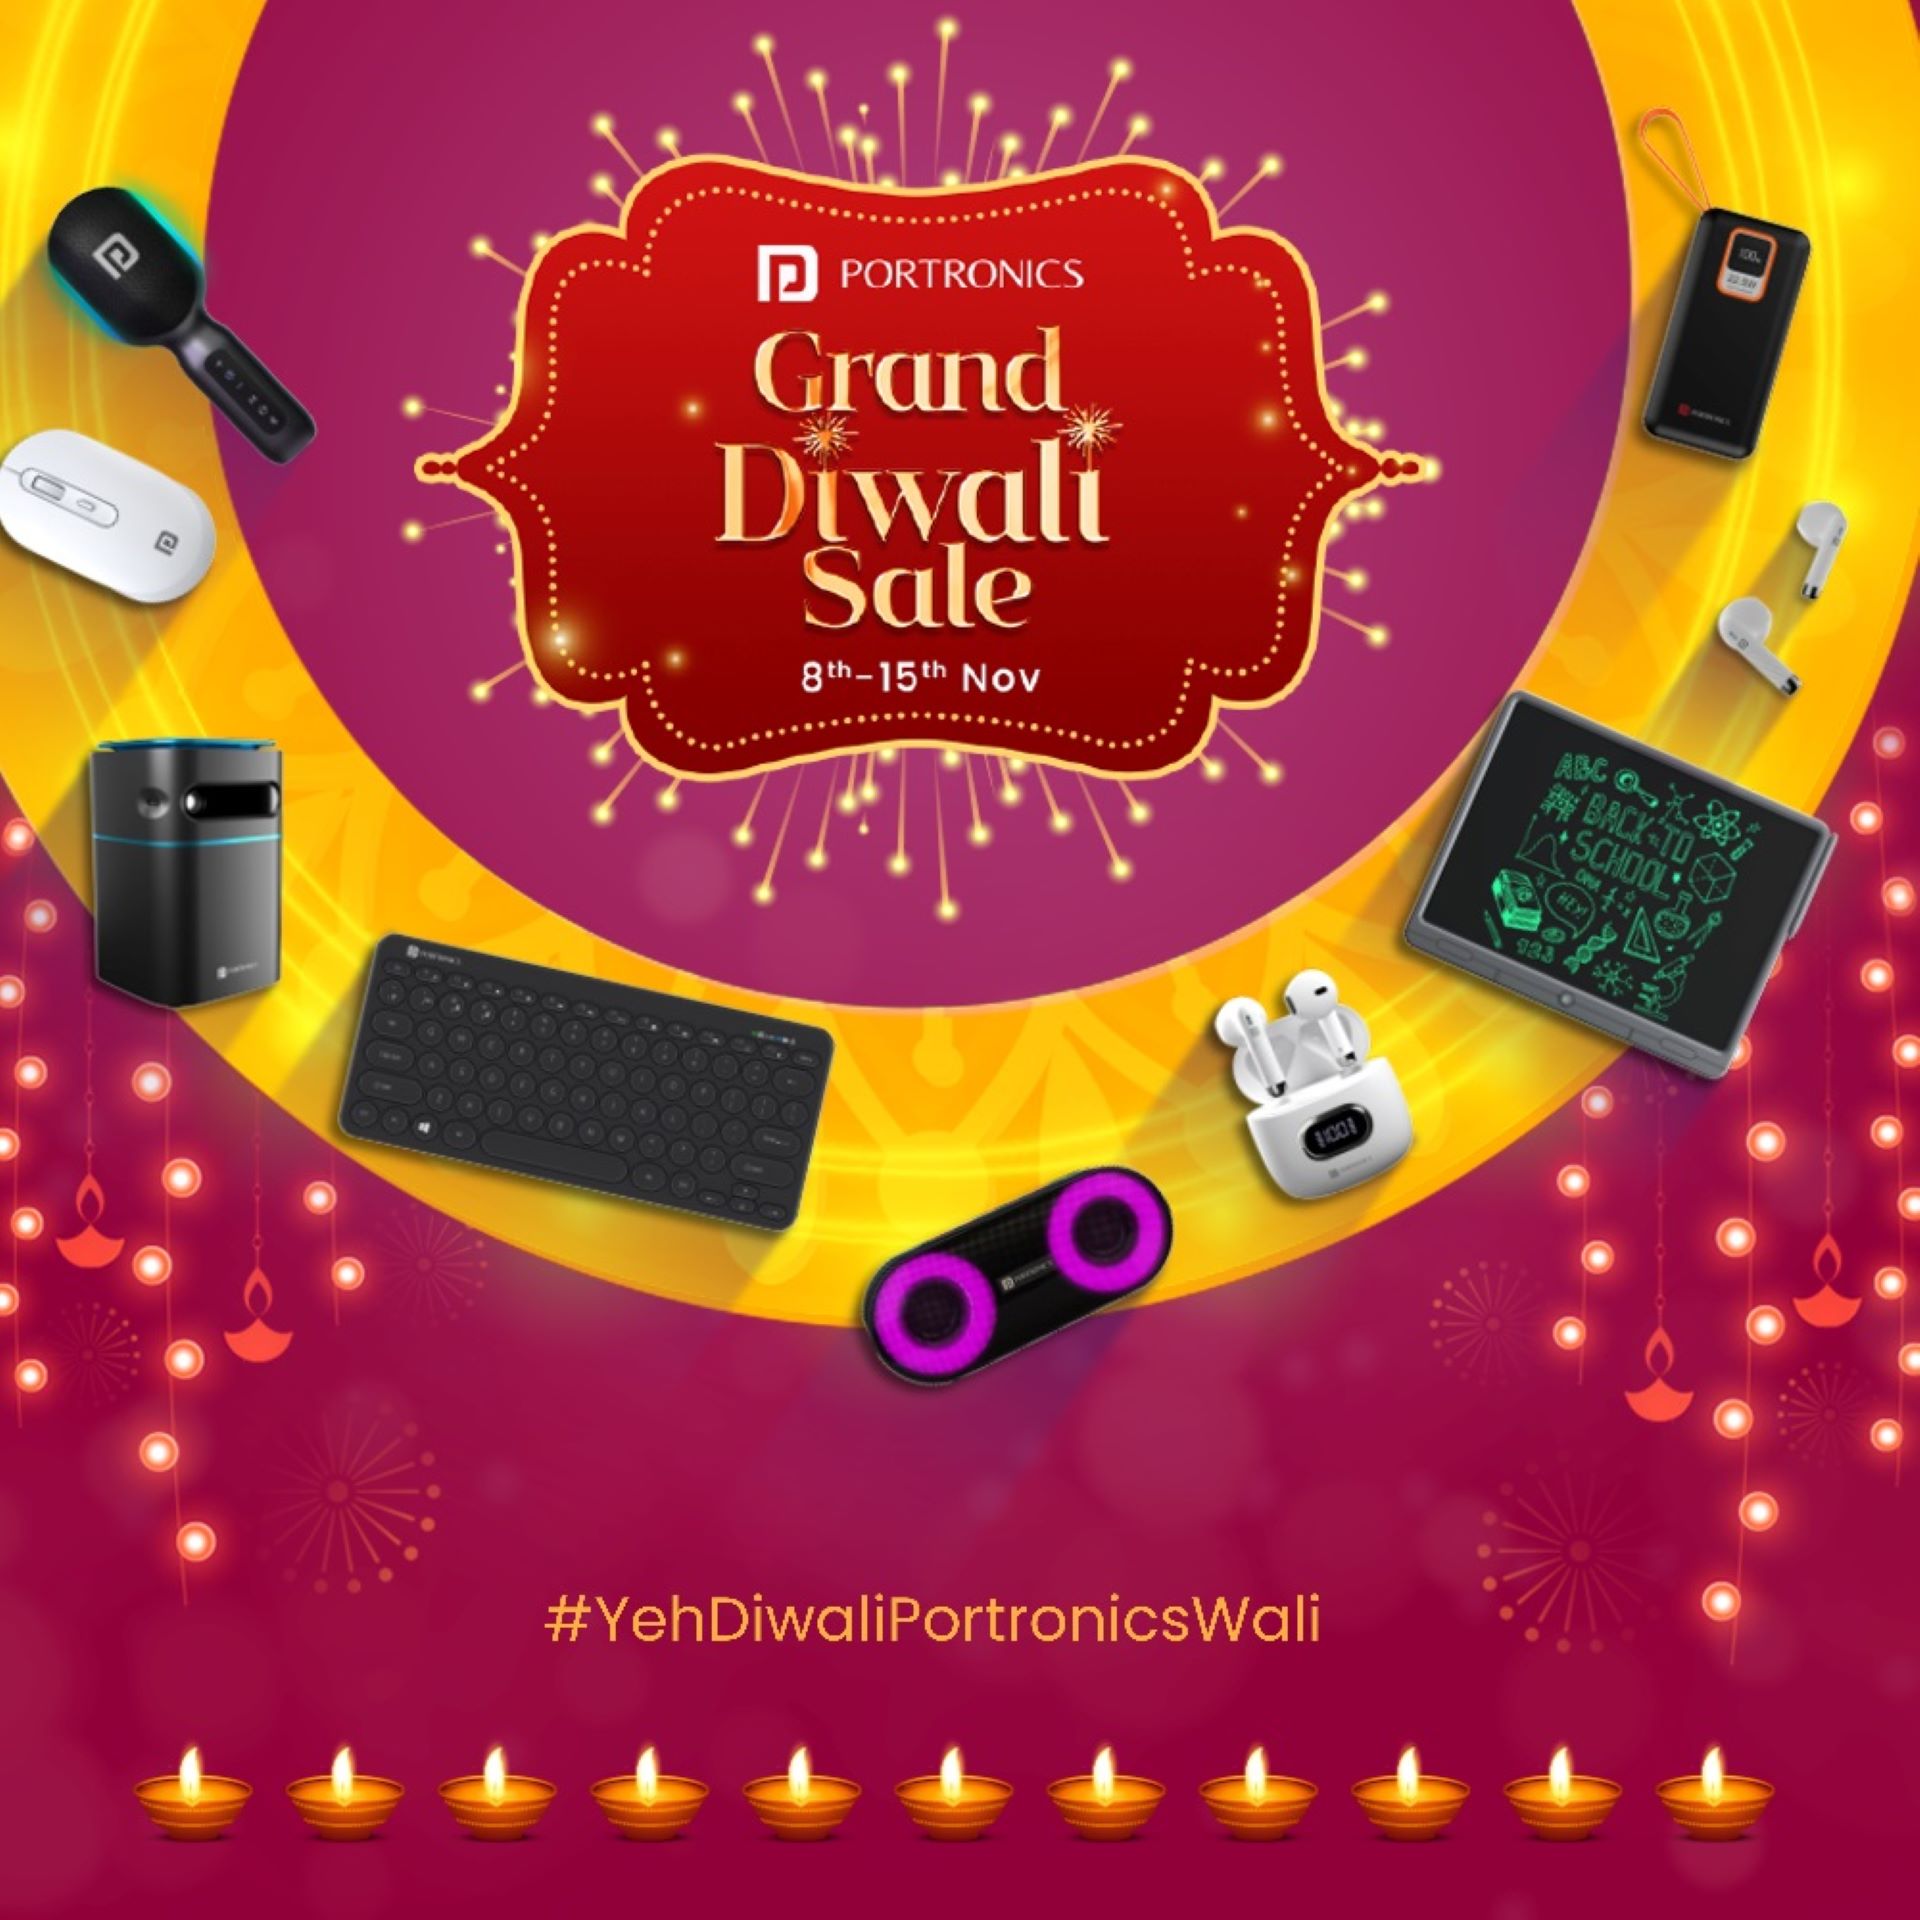 Portronics Launches Diwali Discounts on Electronics